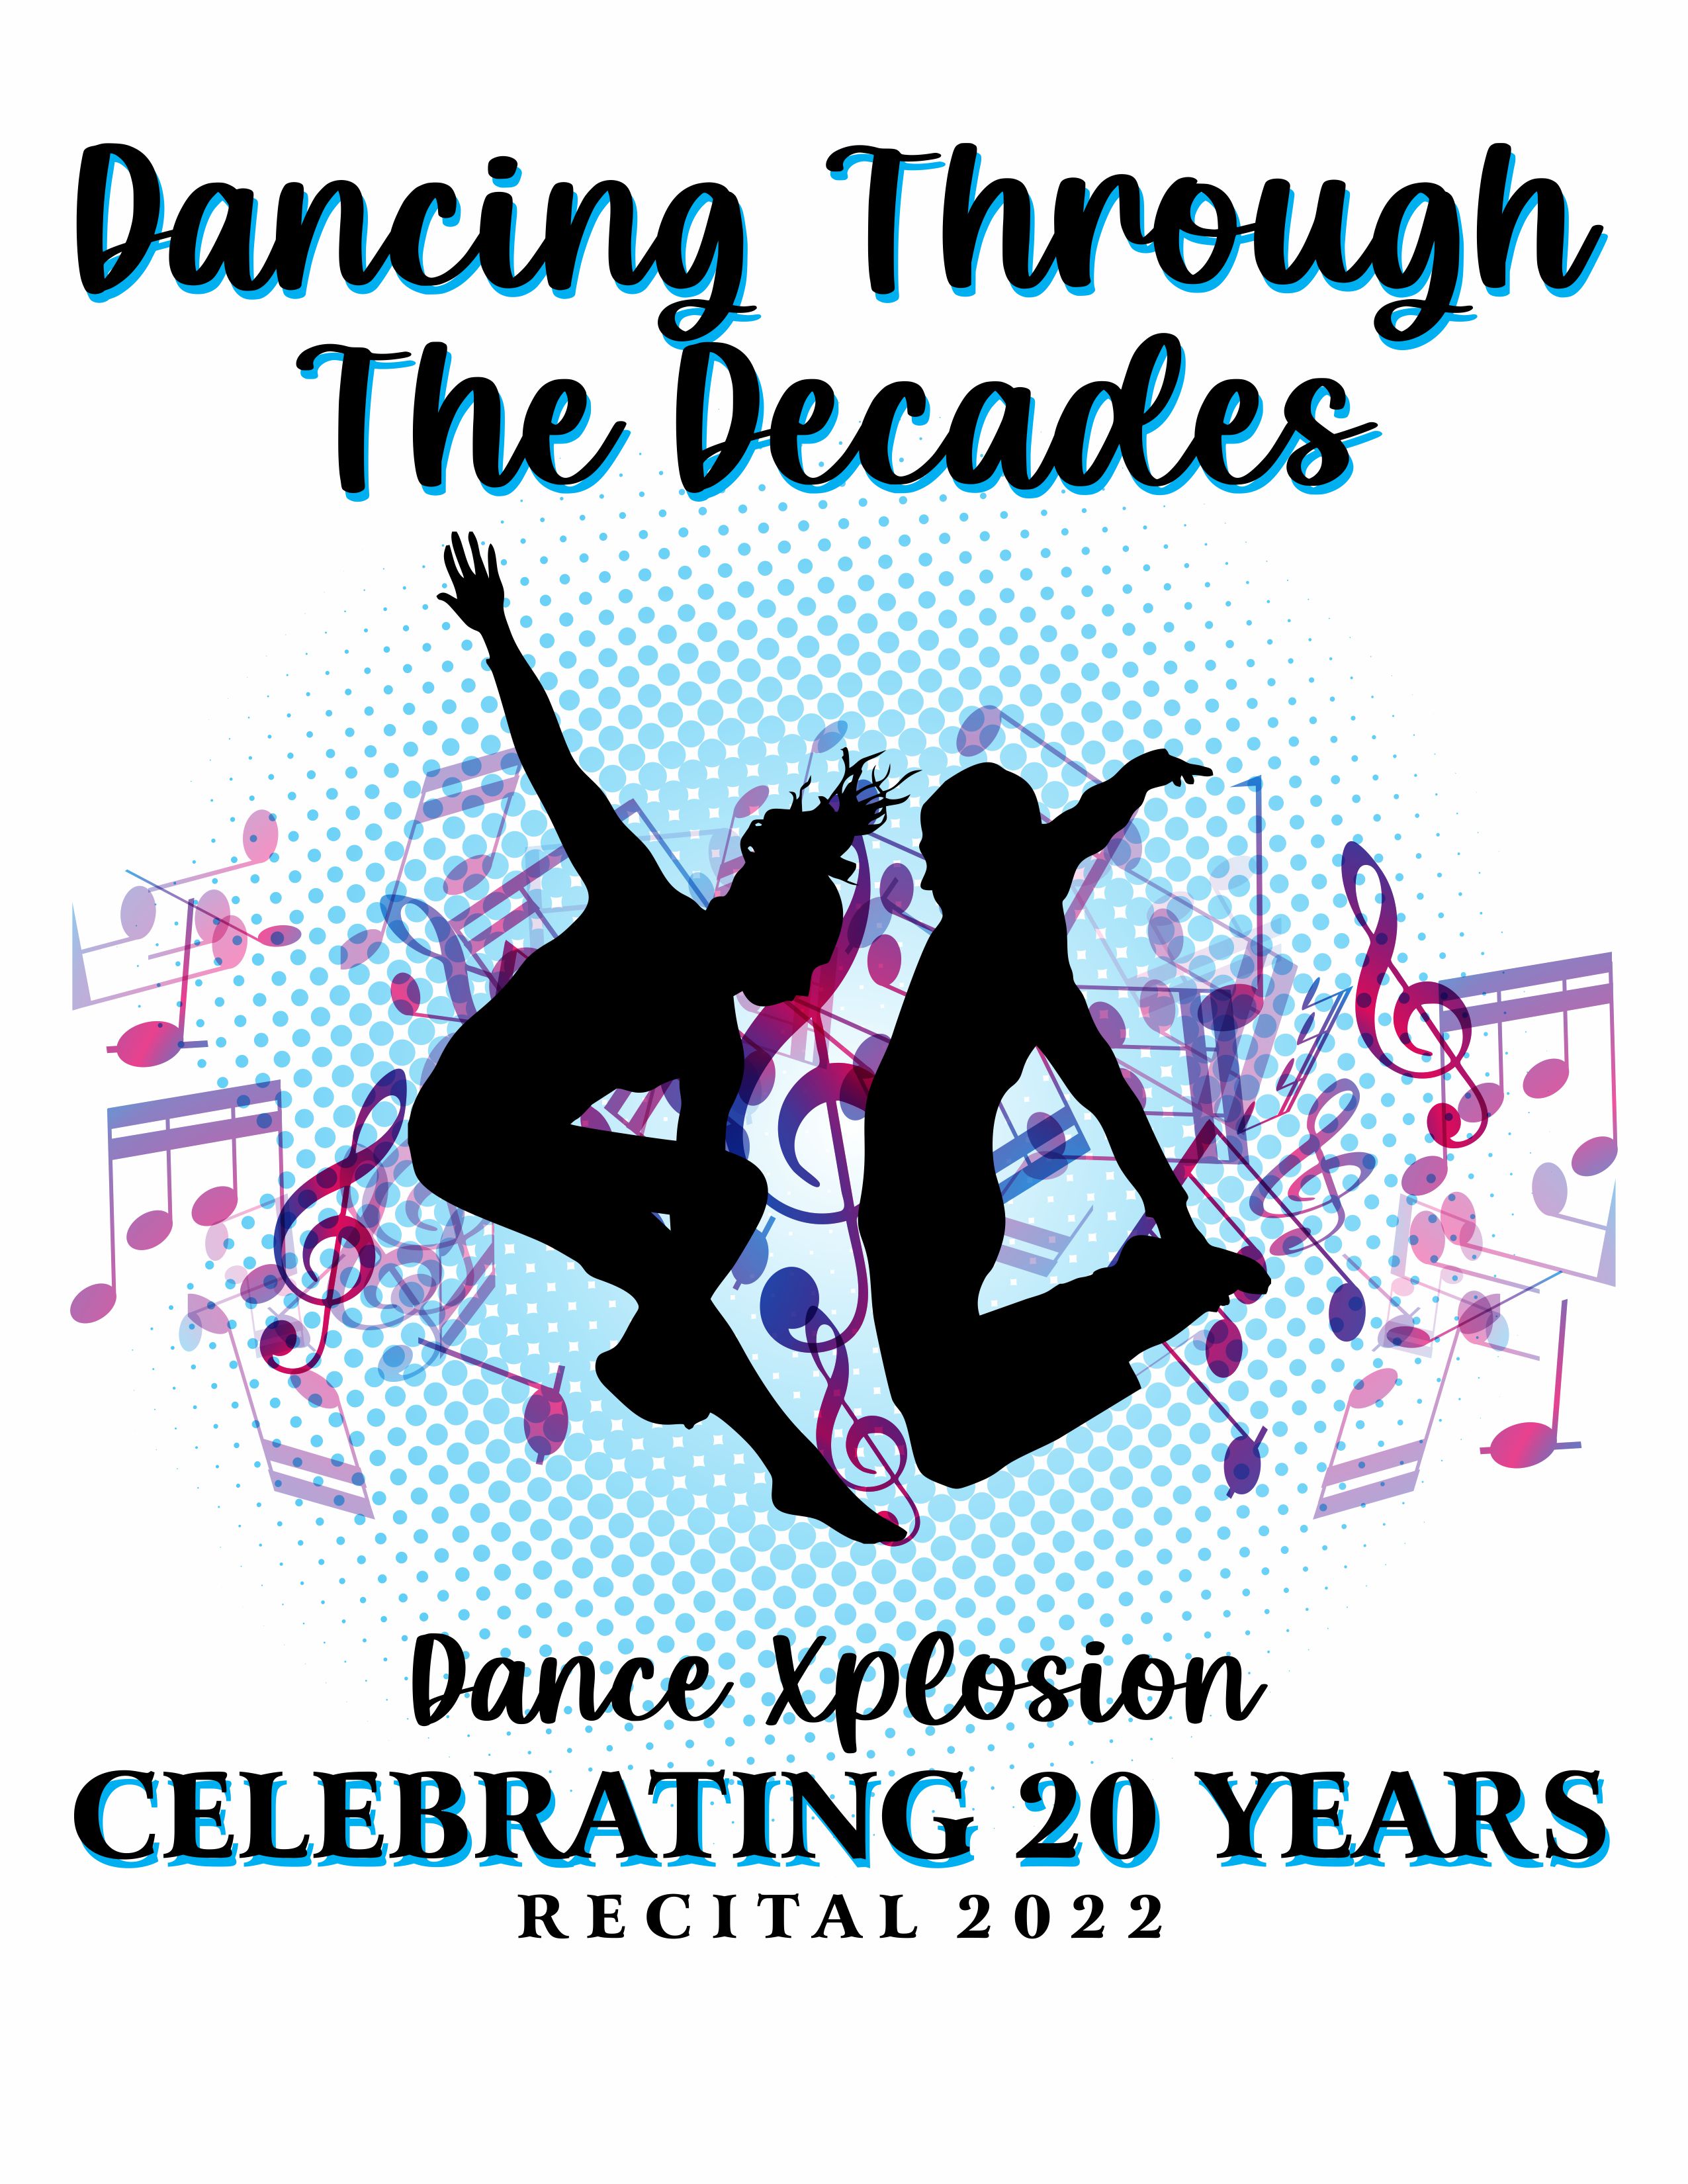 DanceXplosion Recital 2022 - Dancing Through the Decades